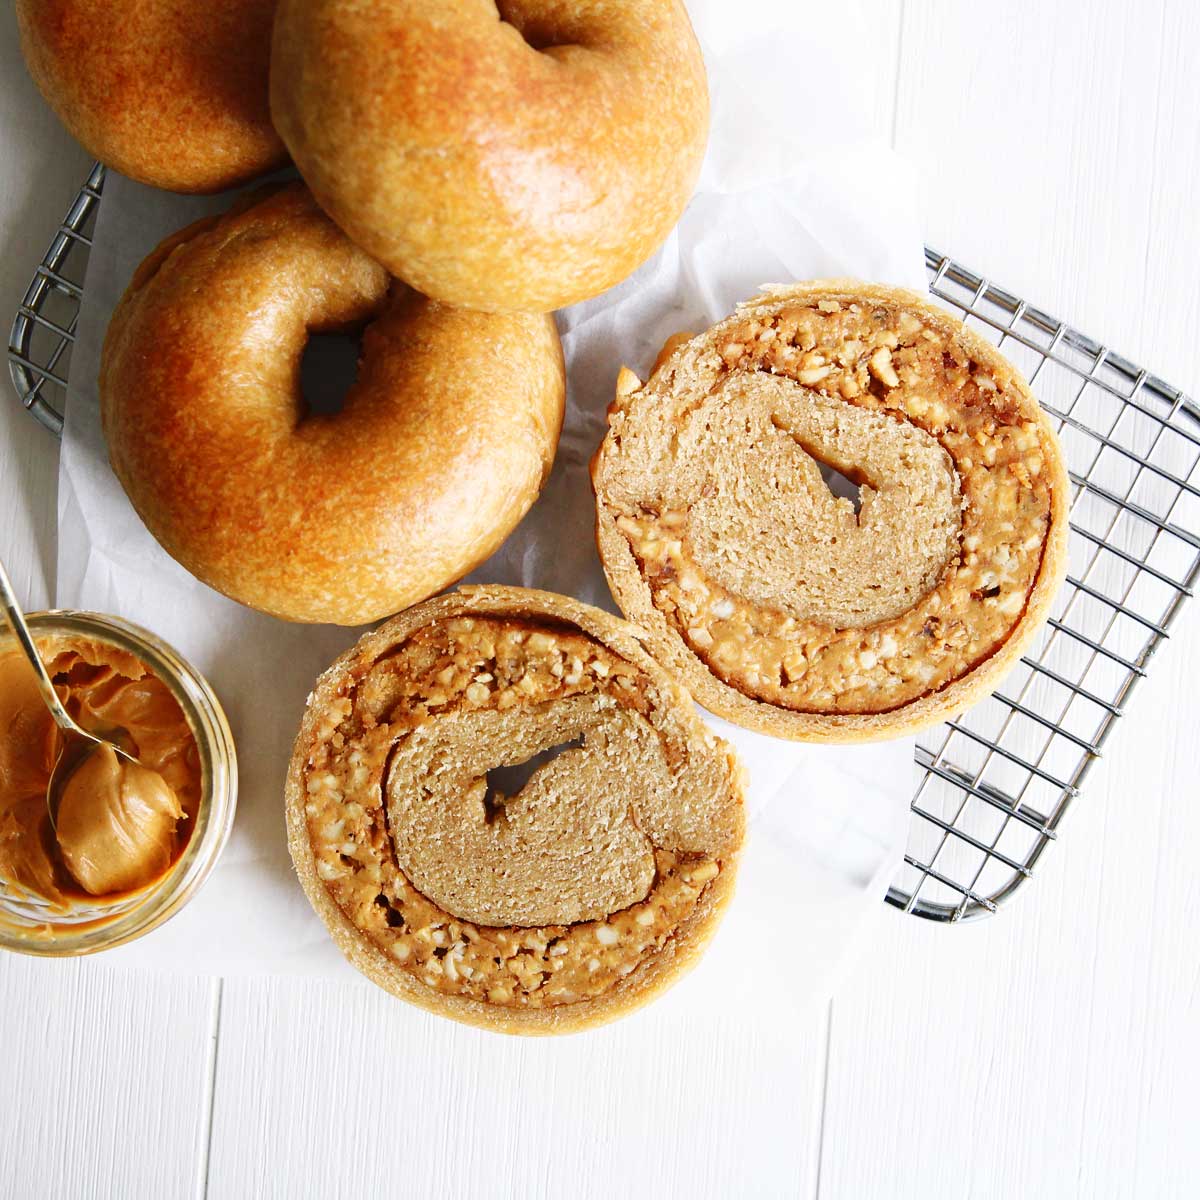 Vegan Apple Pie Stuffed Bagels (A Healthier, Fat-Free Recipe) - apple pie stuffed bagels